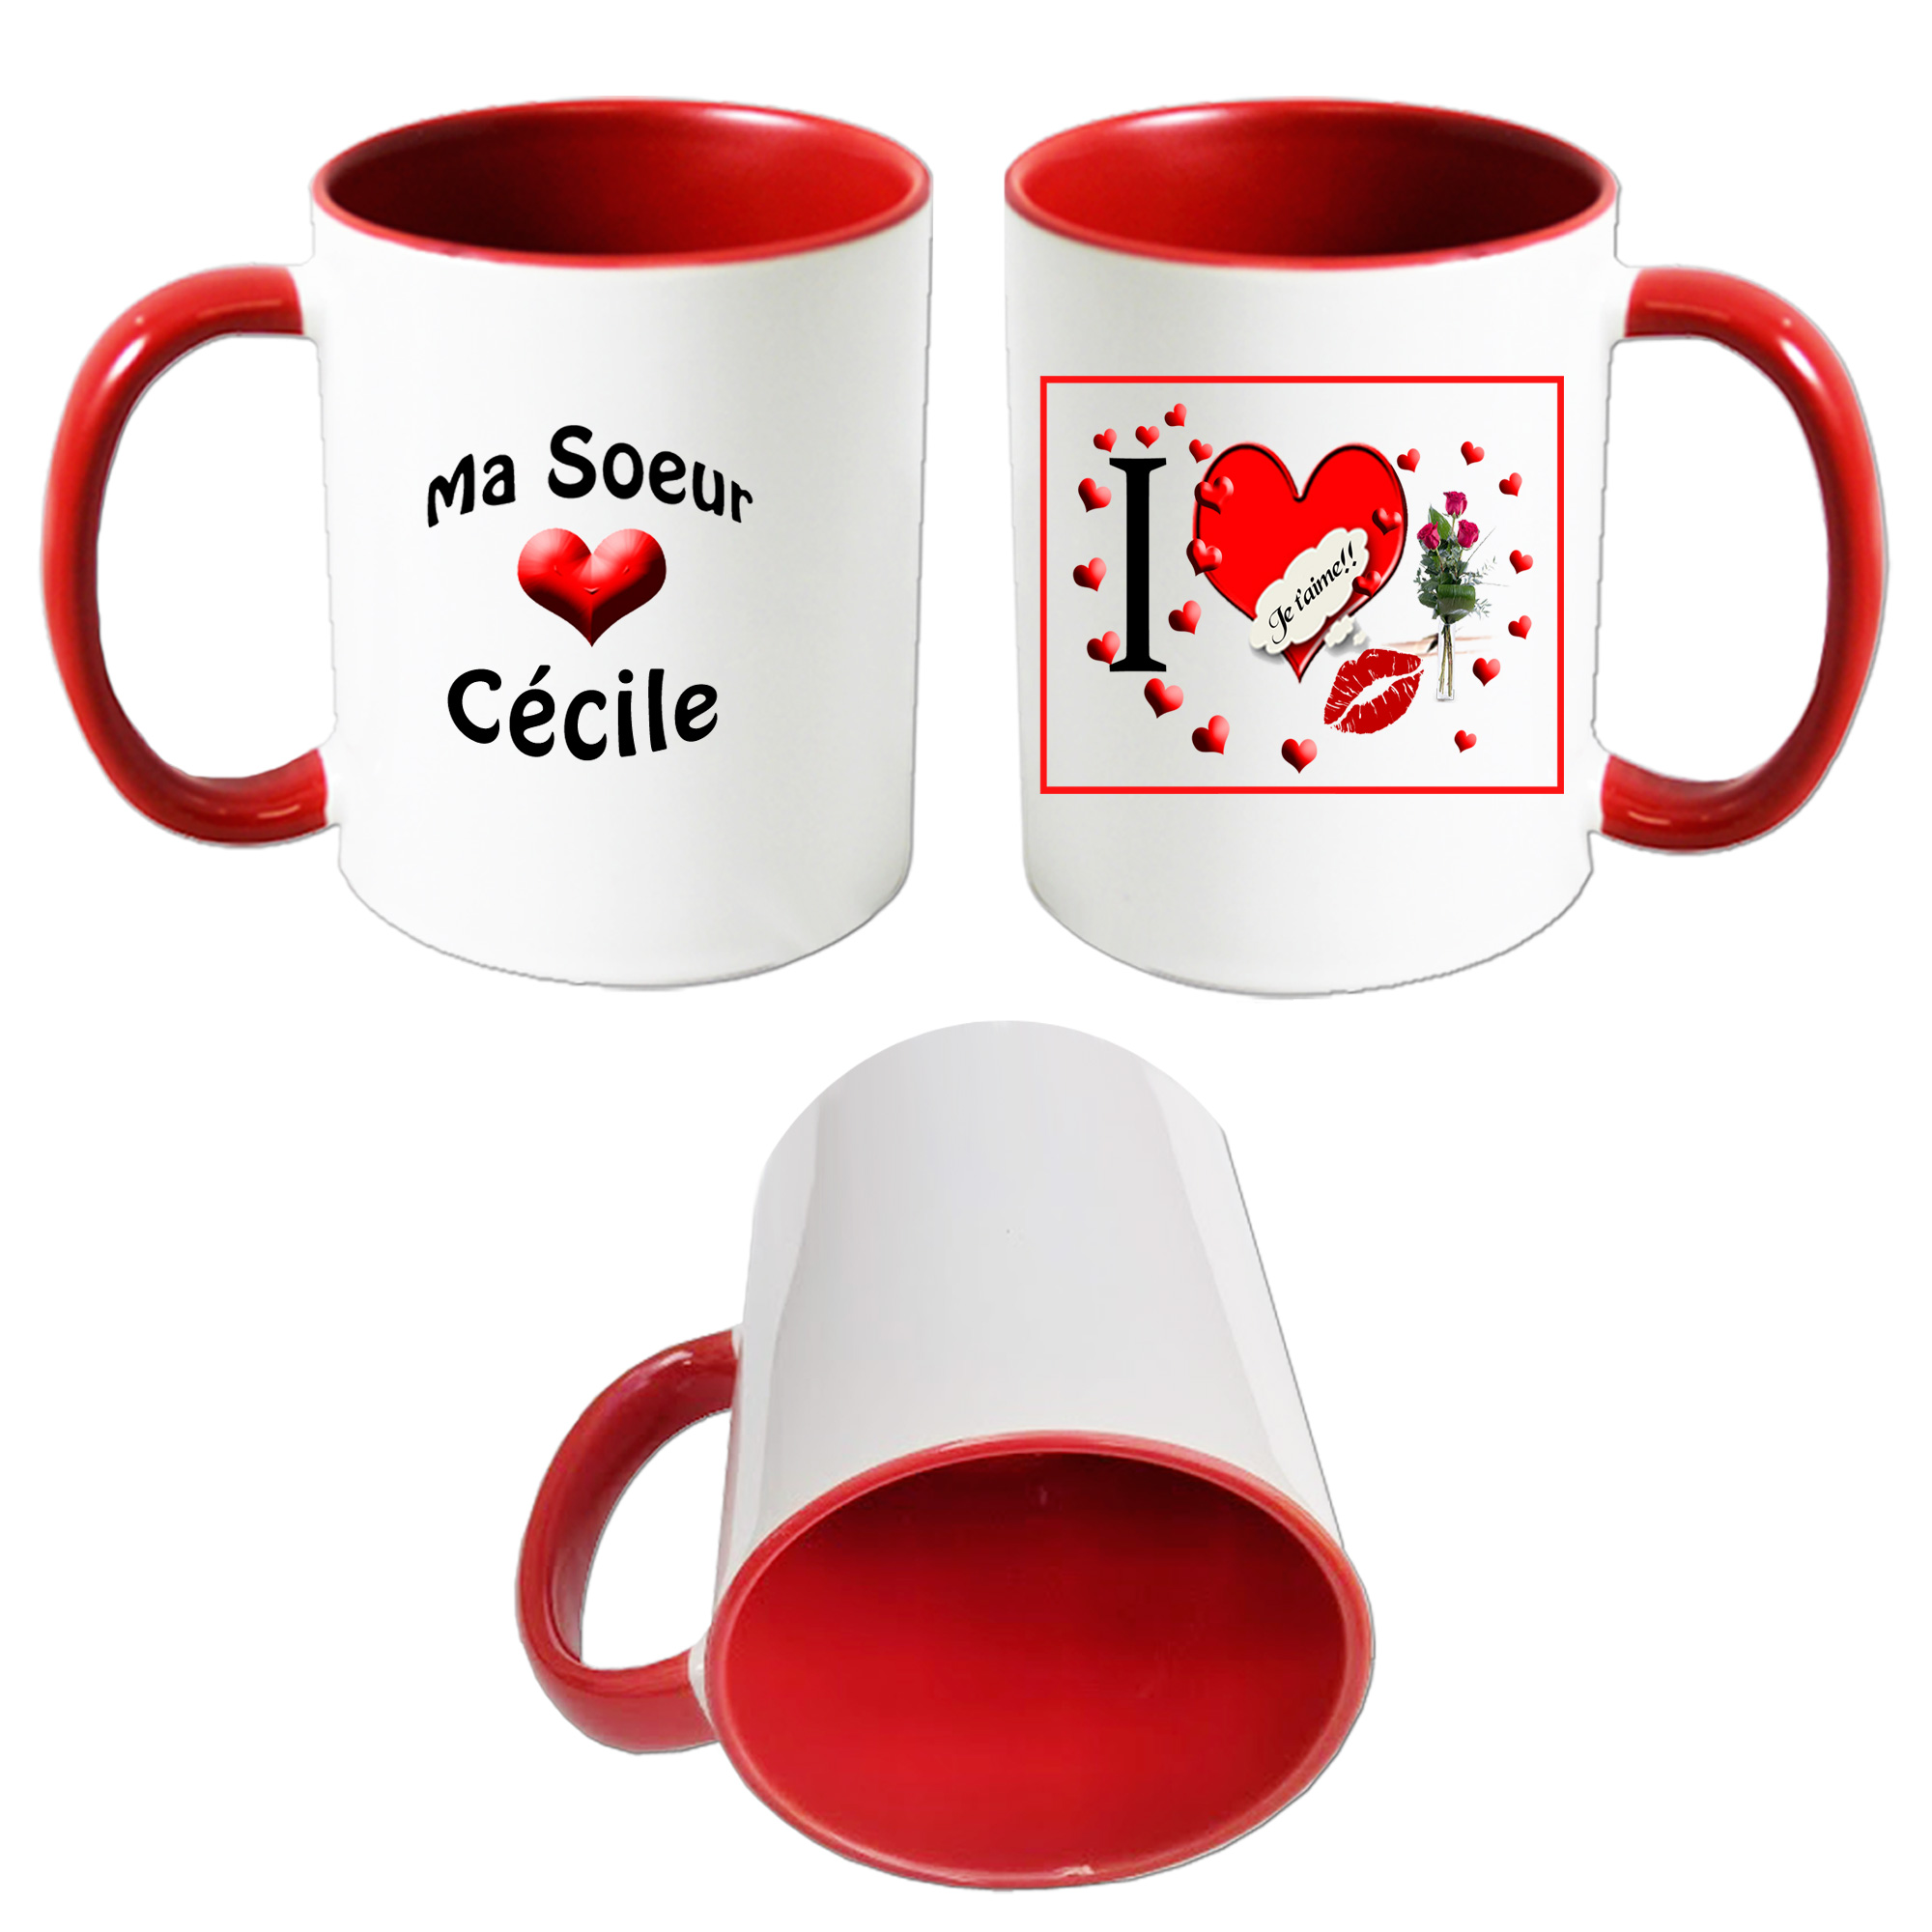 ma-famille-mug-rouge-personnalisable-coeur-love-amour-phrase-rectangle-prenom-cecile